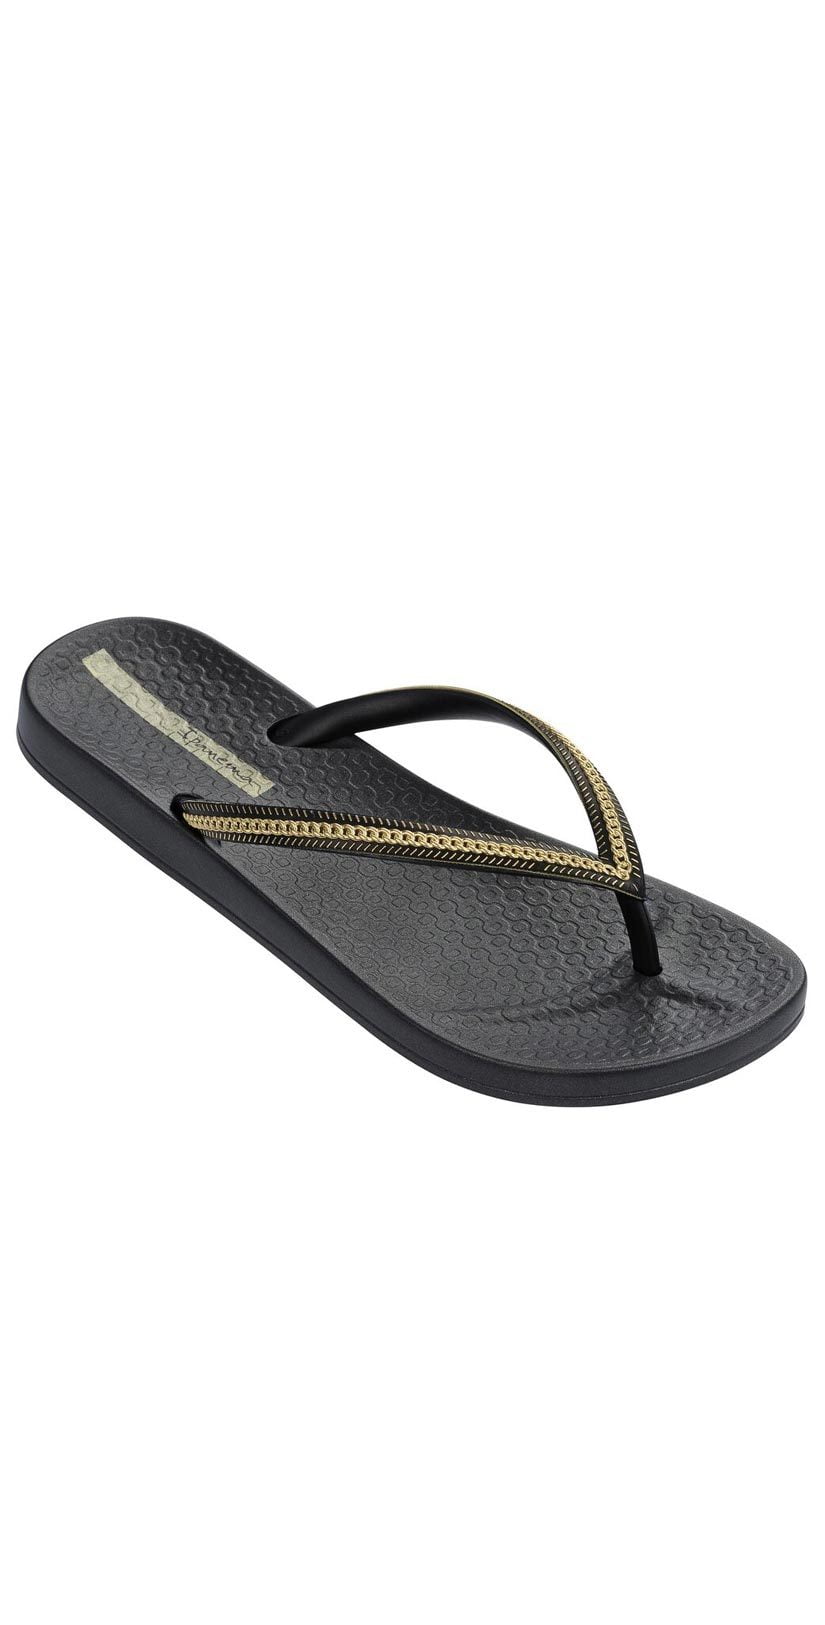 Ipanema Ana Metallic Black Gold Thong Sandal 23480 Black / 7 - Walmart.com